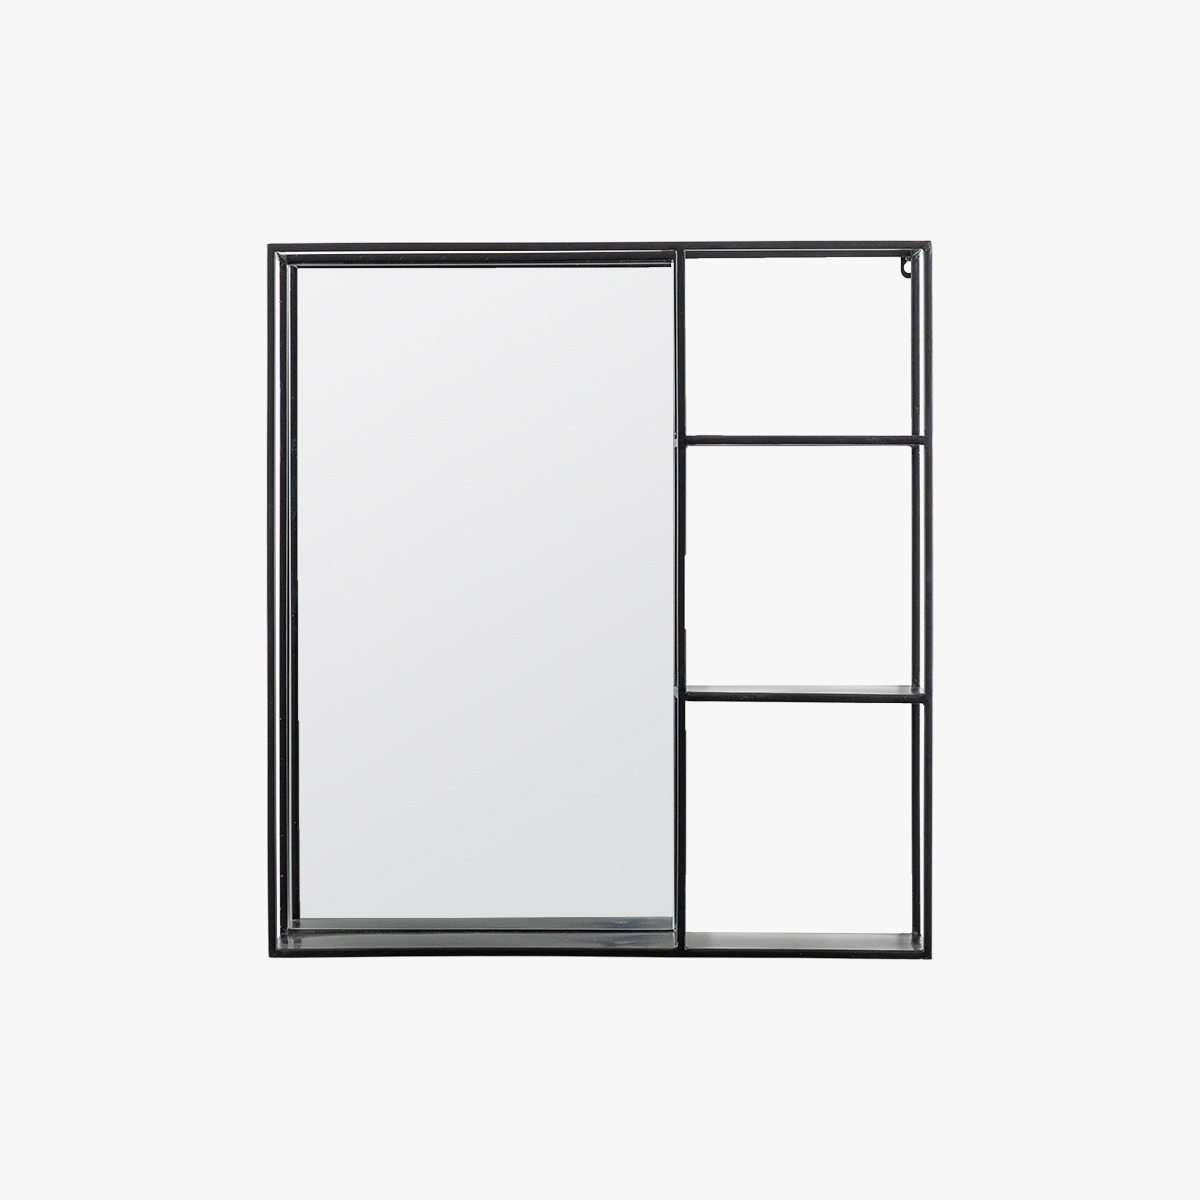 Top-Self Mirror Shelf in Black